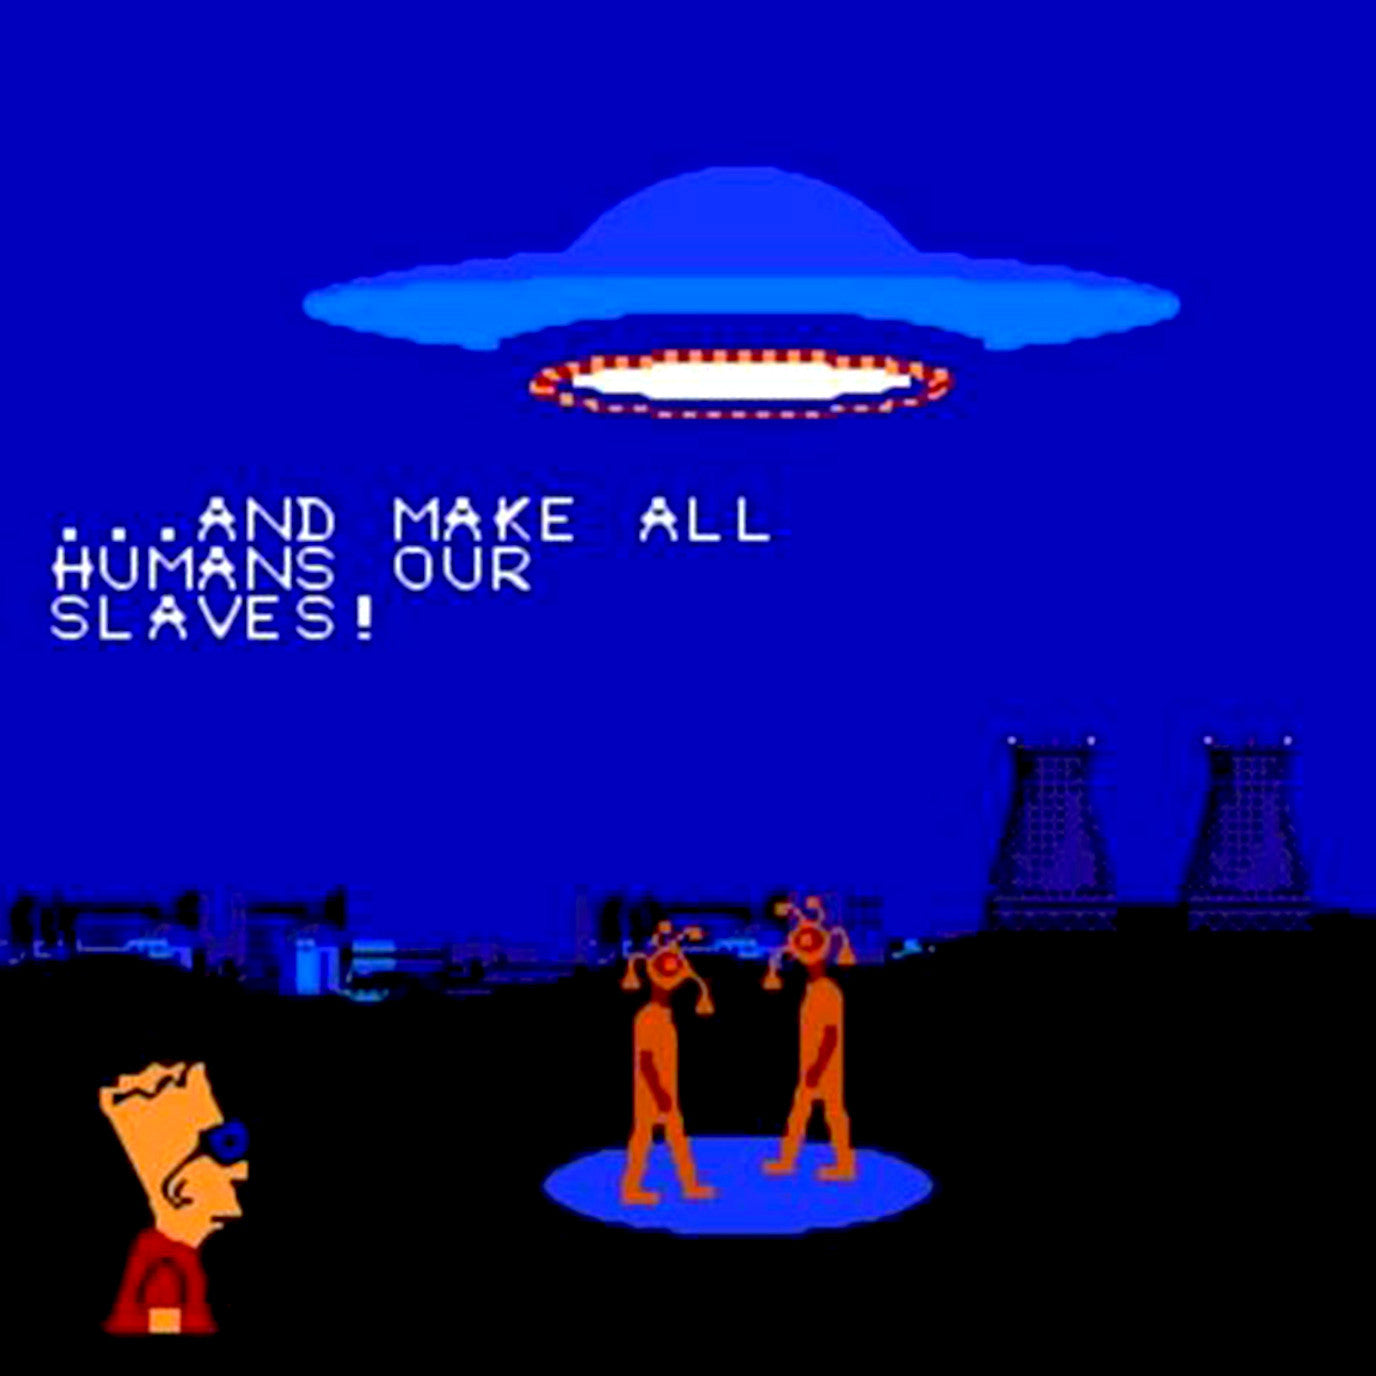 The Simpsons: Bart vs. the Space Mutants NES Nintendo Game - Screenshot